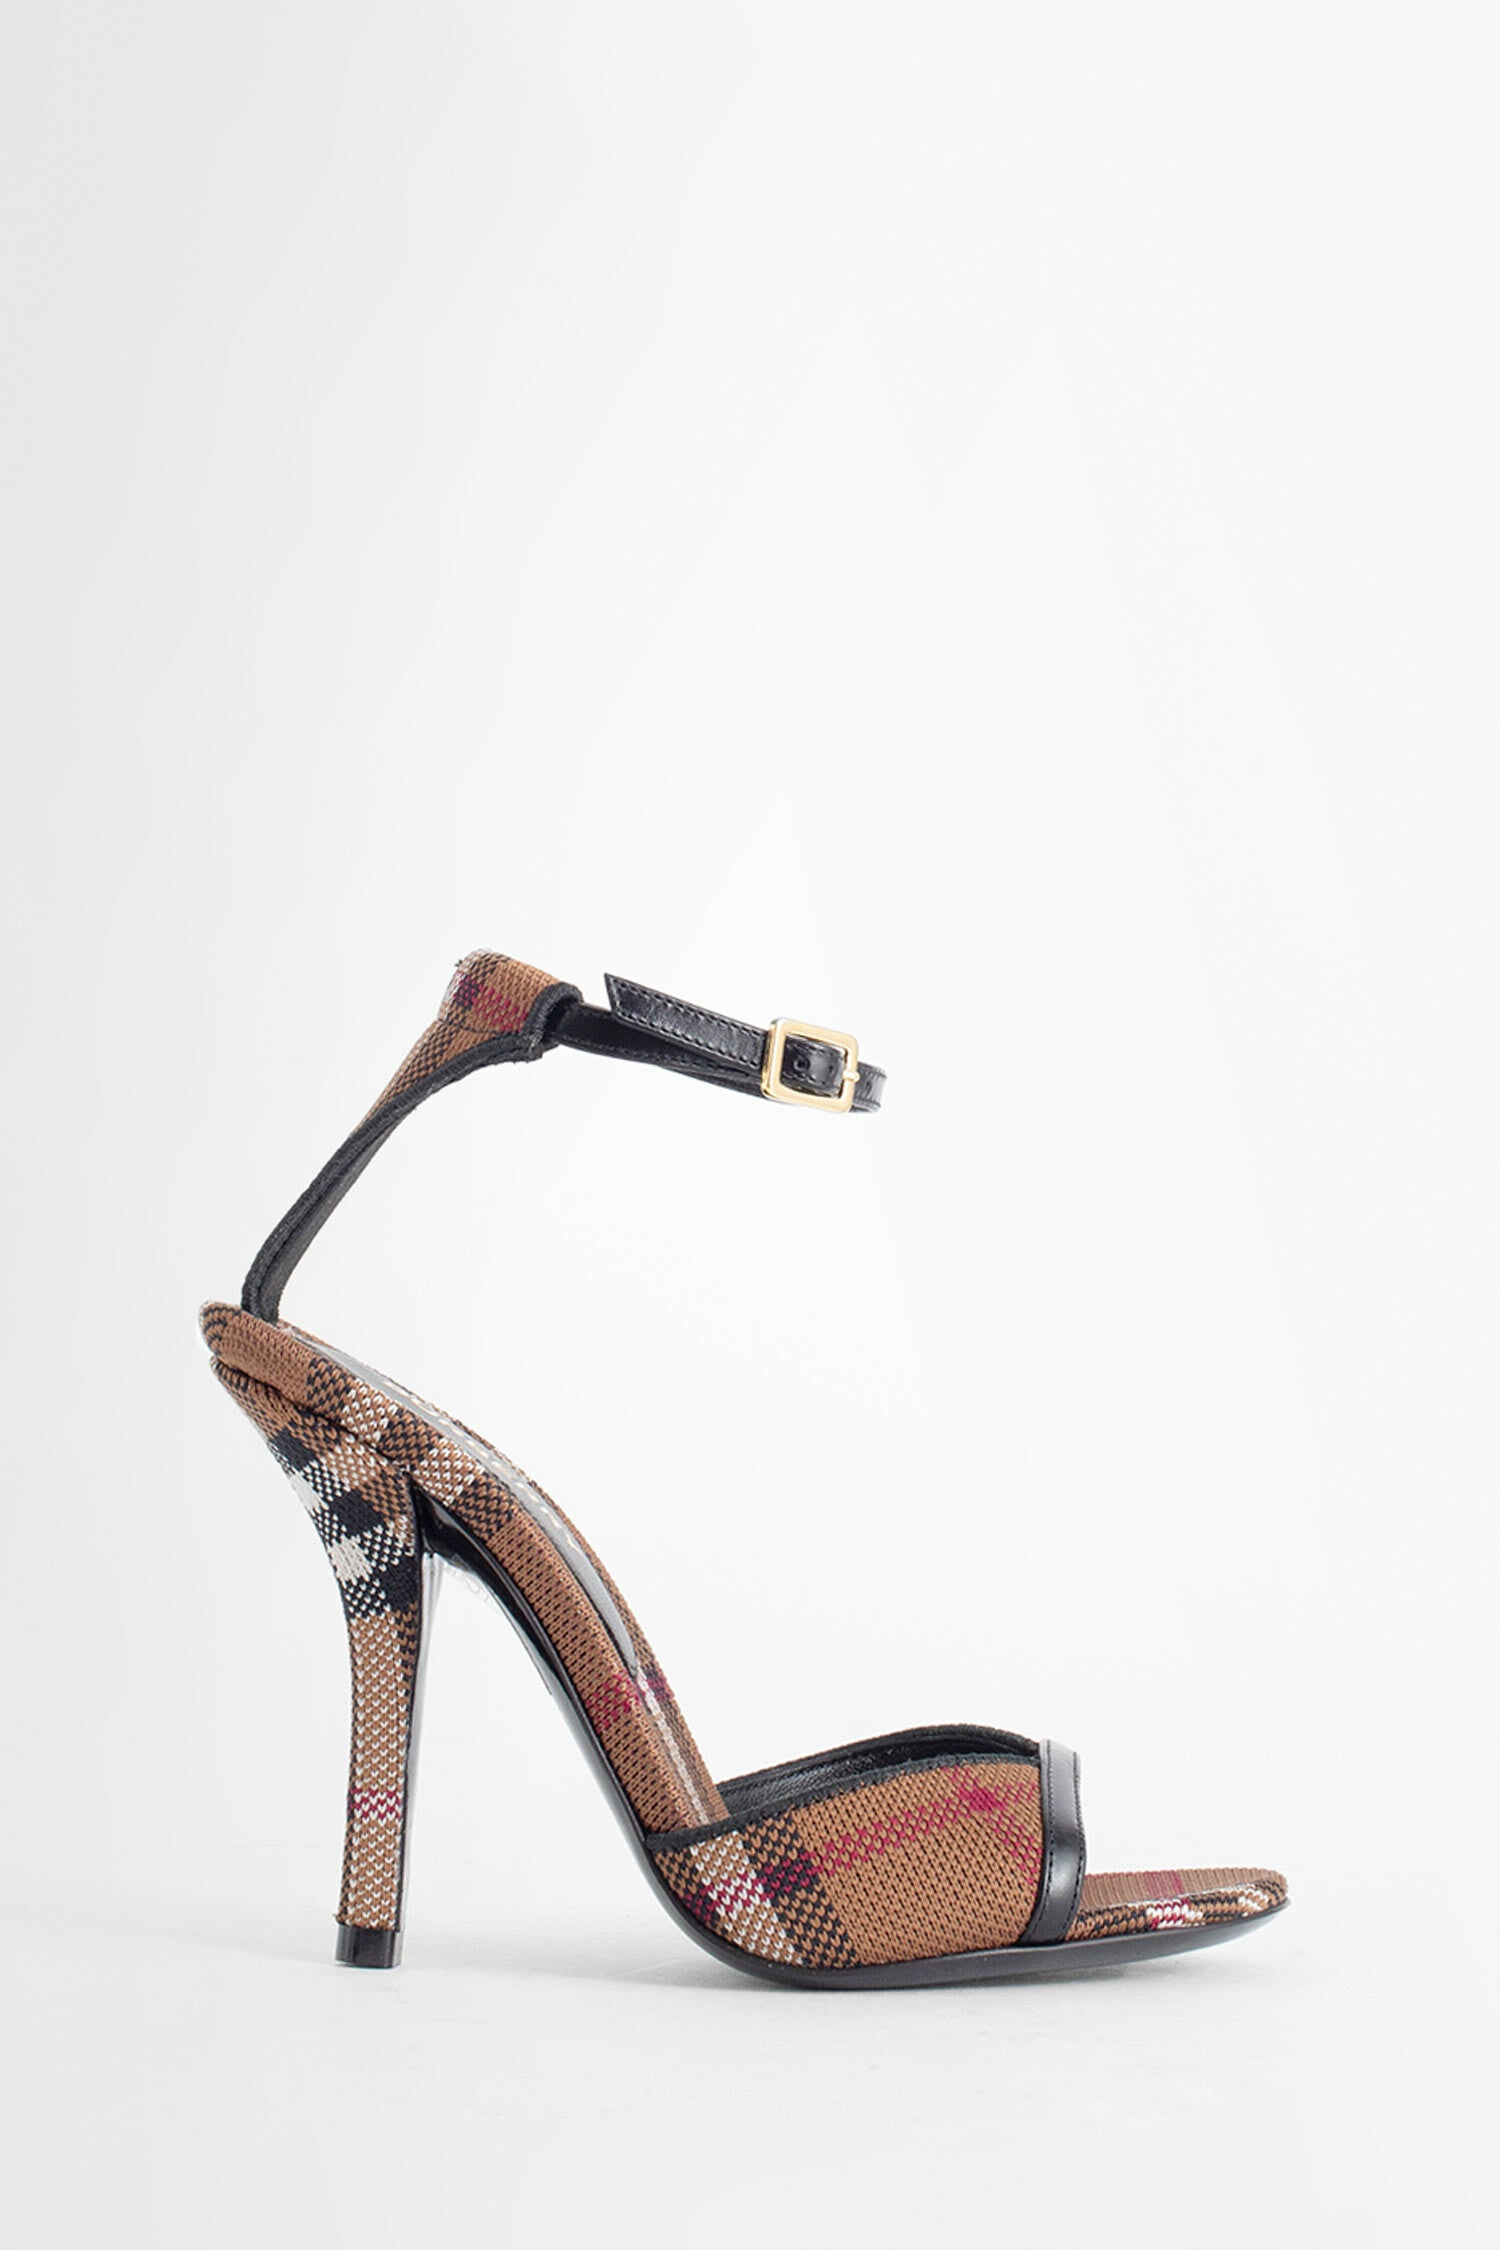 Burberry Woman Brown Sandals | ModeSens